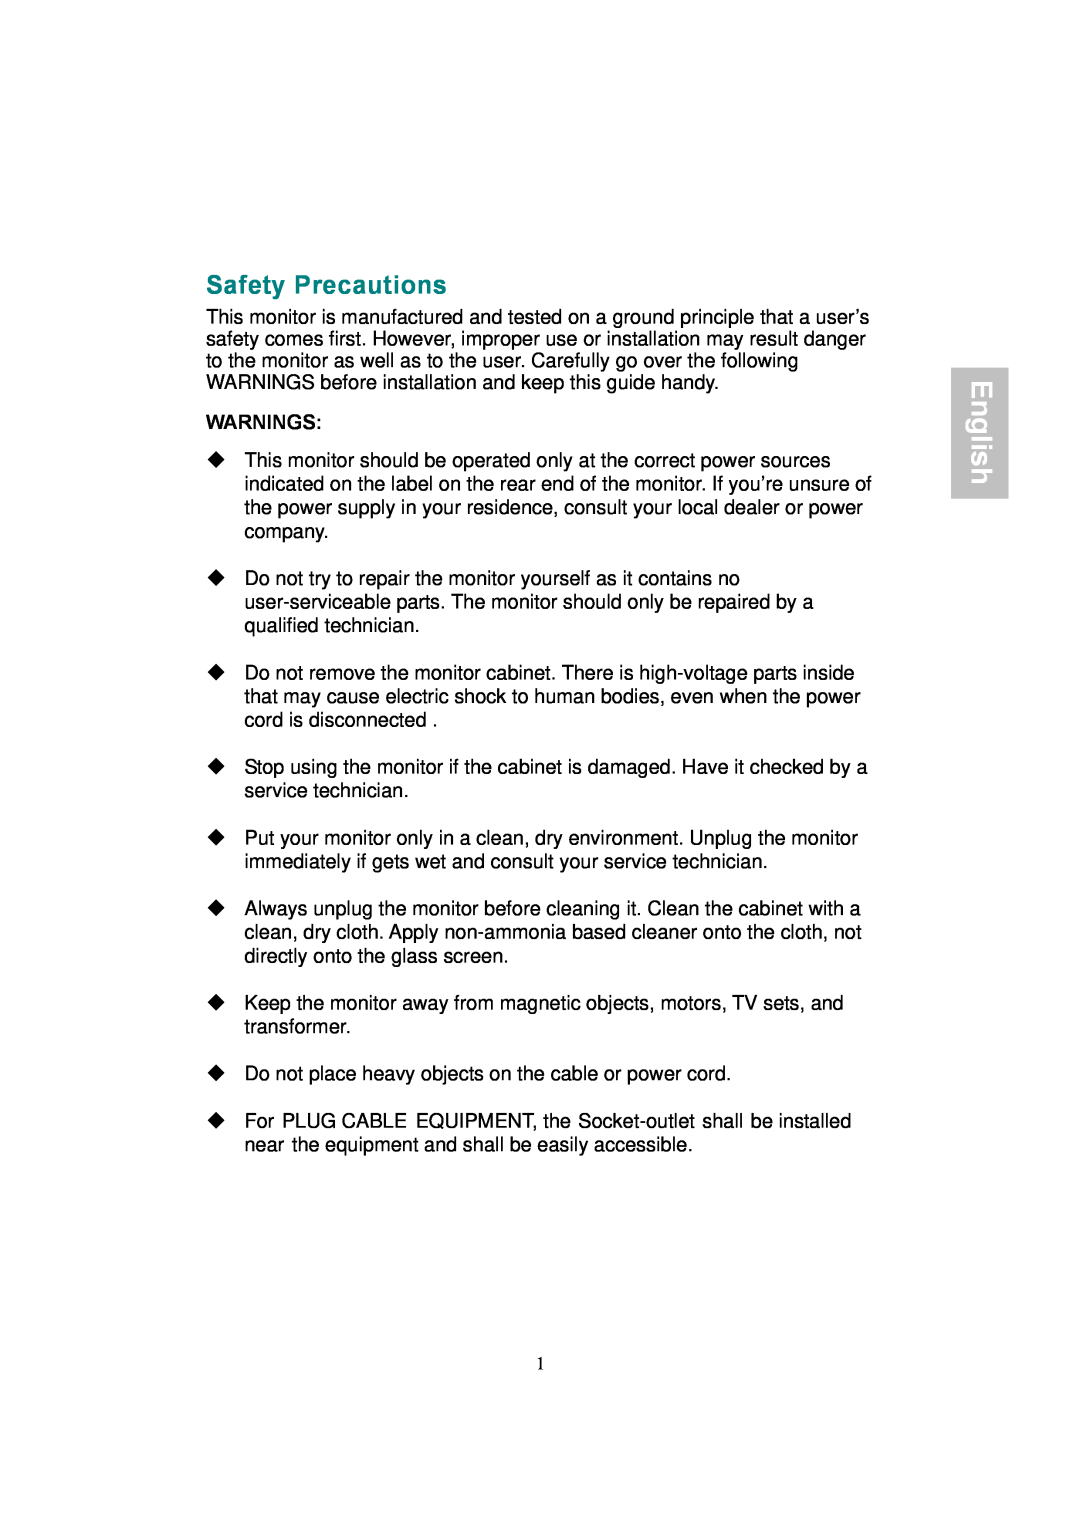 AOC 177S manual Safety Precautions, English, Warnings 